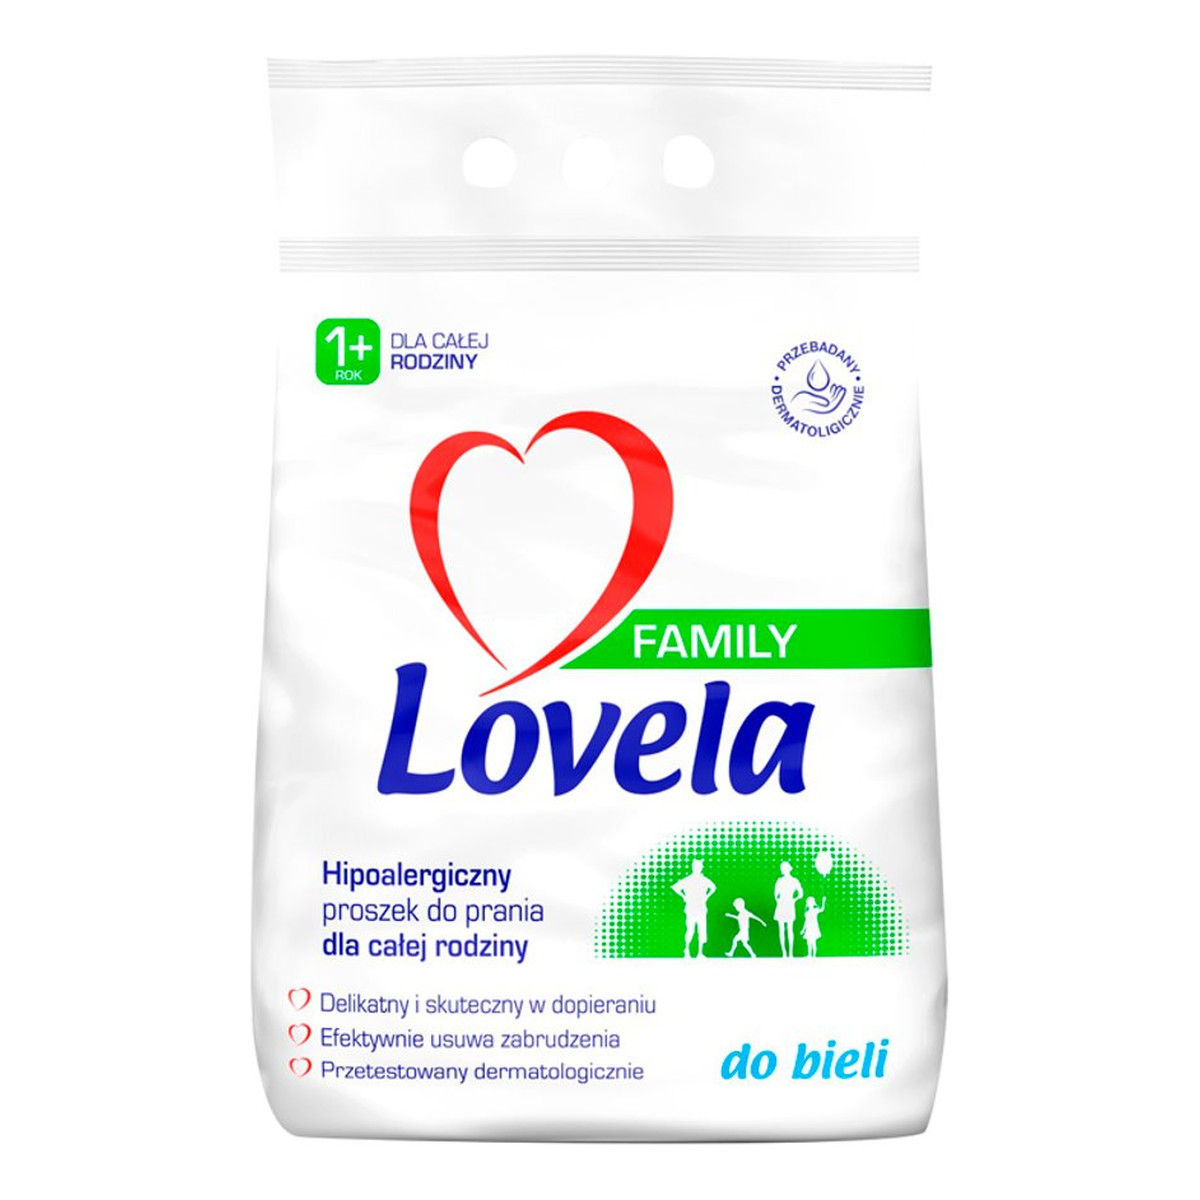 Lovela Family hipoalergiczny proszek do prania bieli 2.1kg 2100g